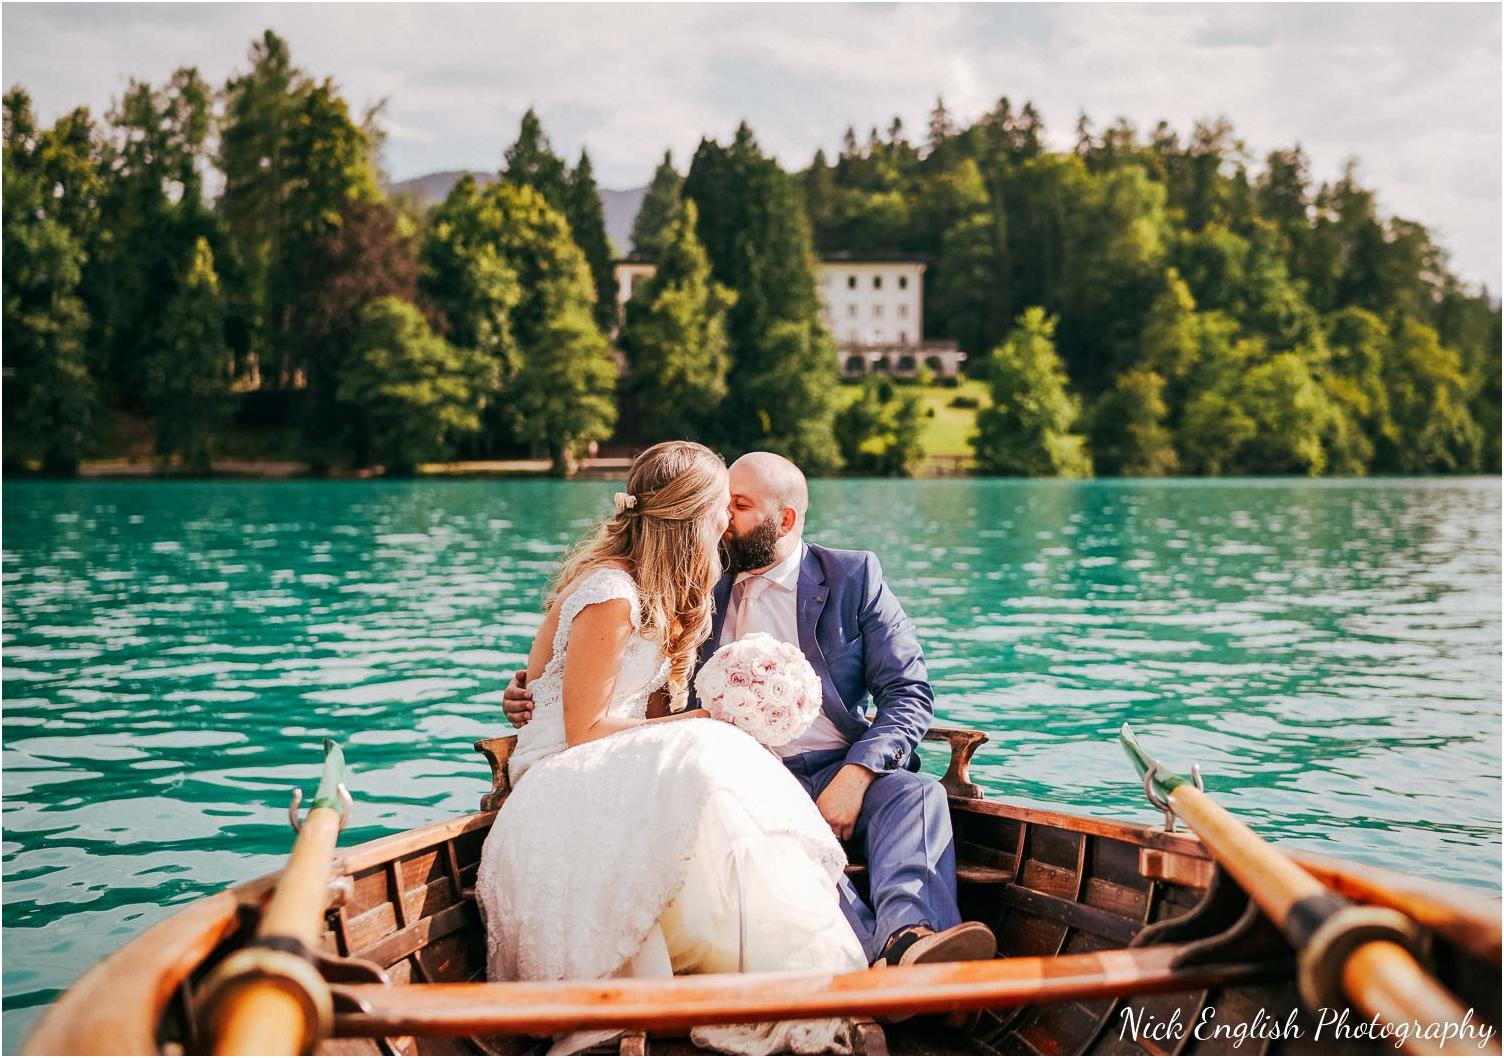 Destination_Wedding_Photographer_Slovenia_Nick_English_Photography-70-3.jpg